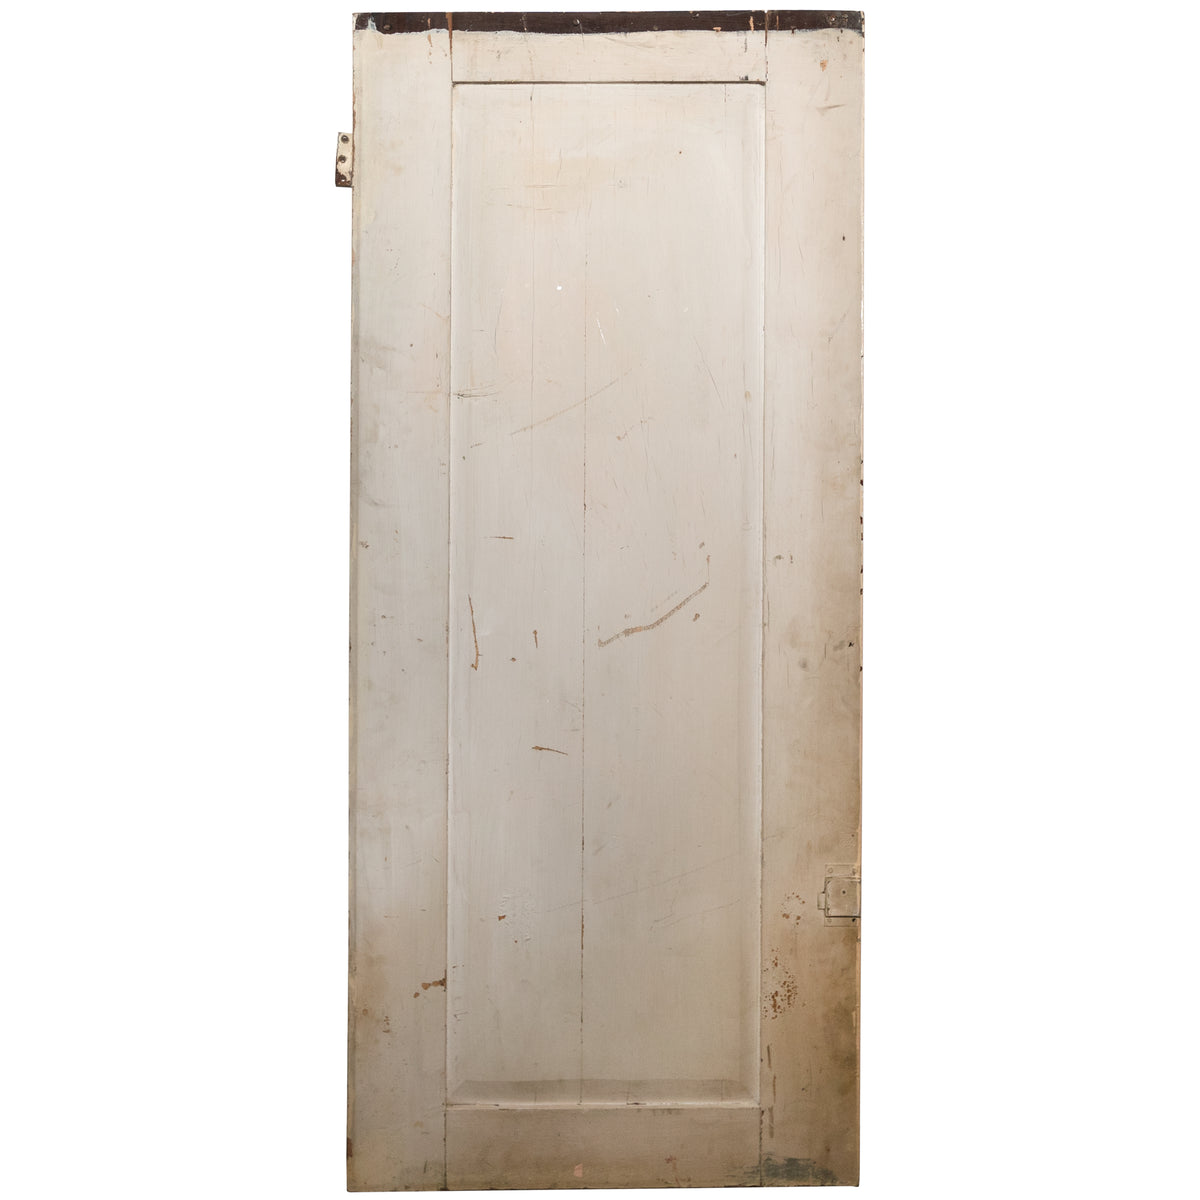 Antique Victorian Pine Cupboard Door - 143cm x 61cm | The Architectural Forum